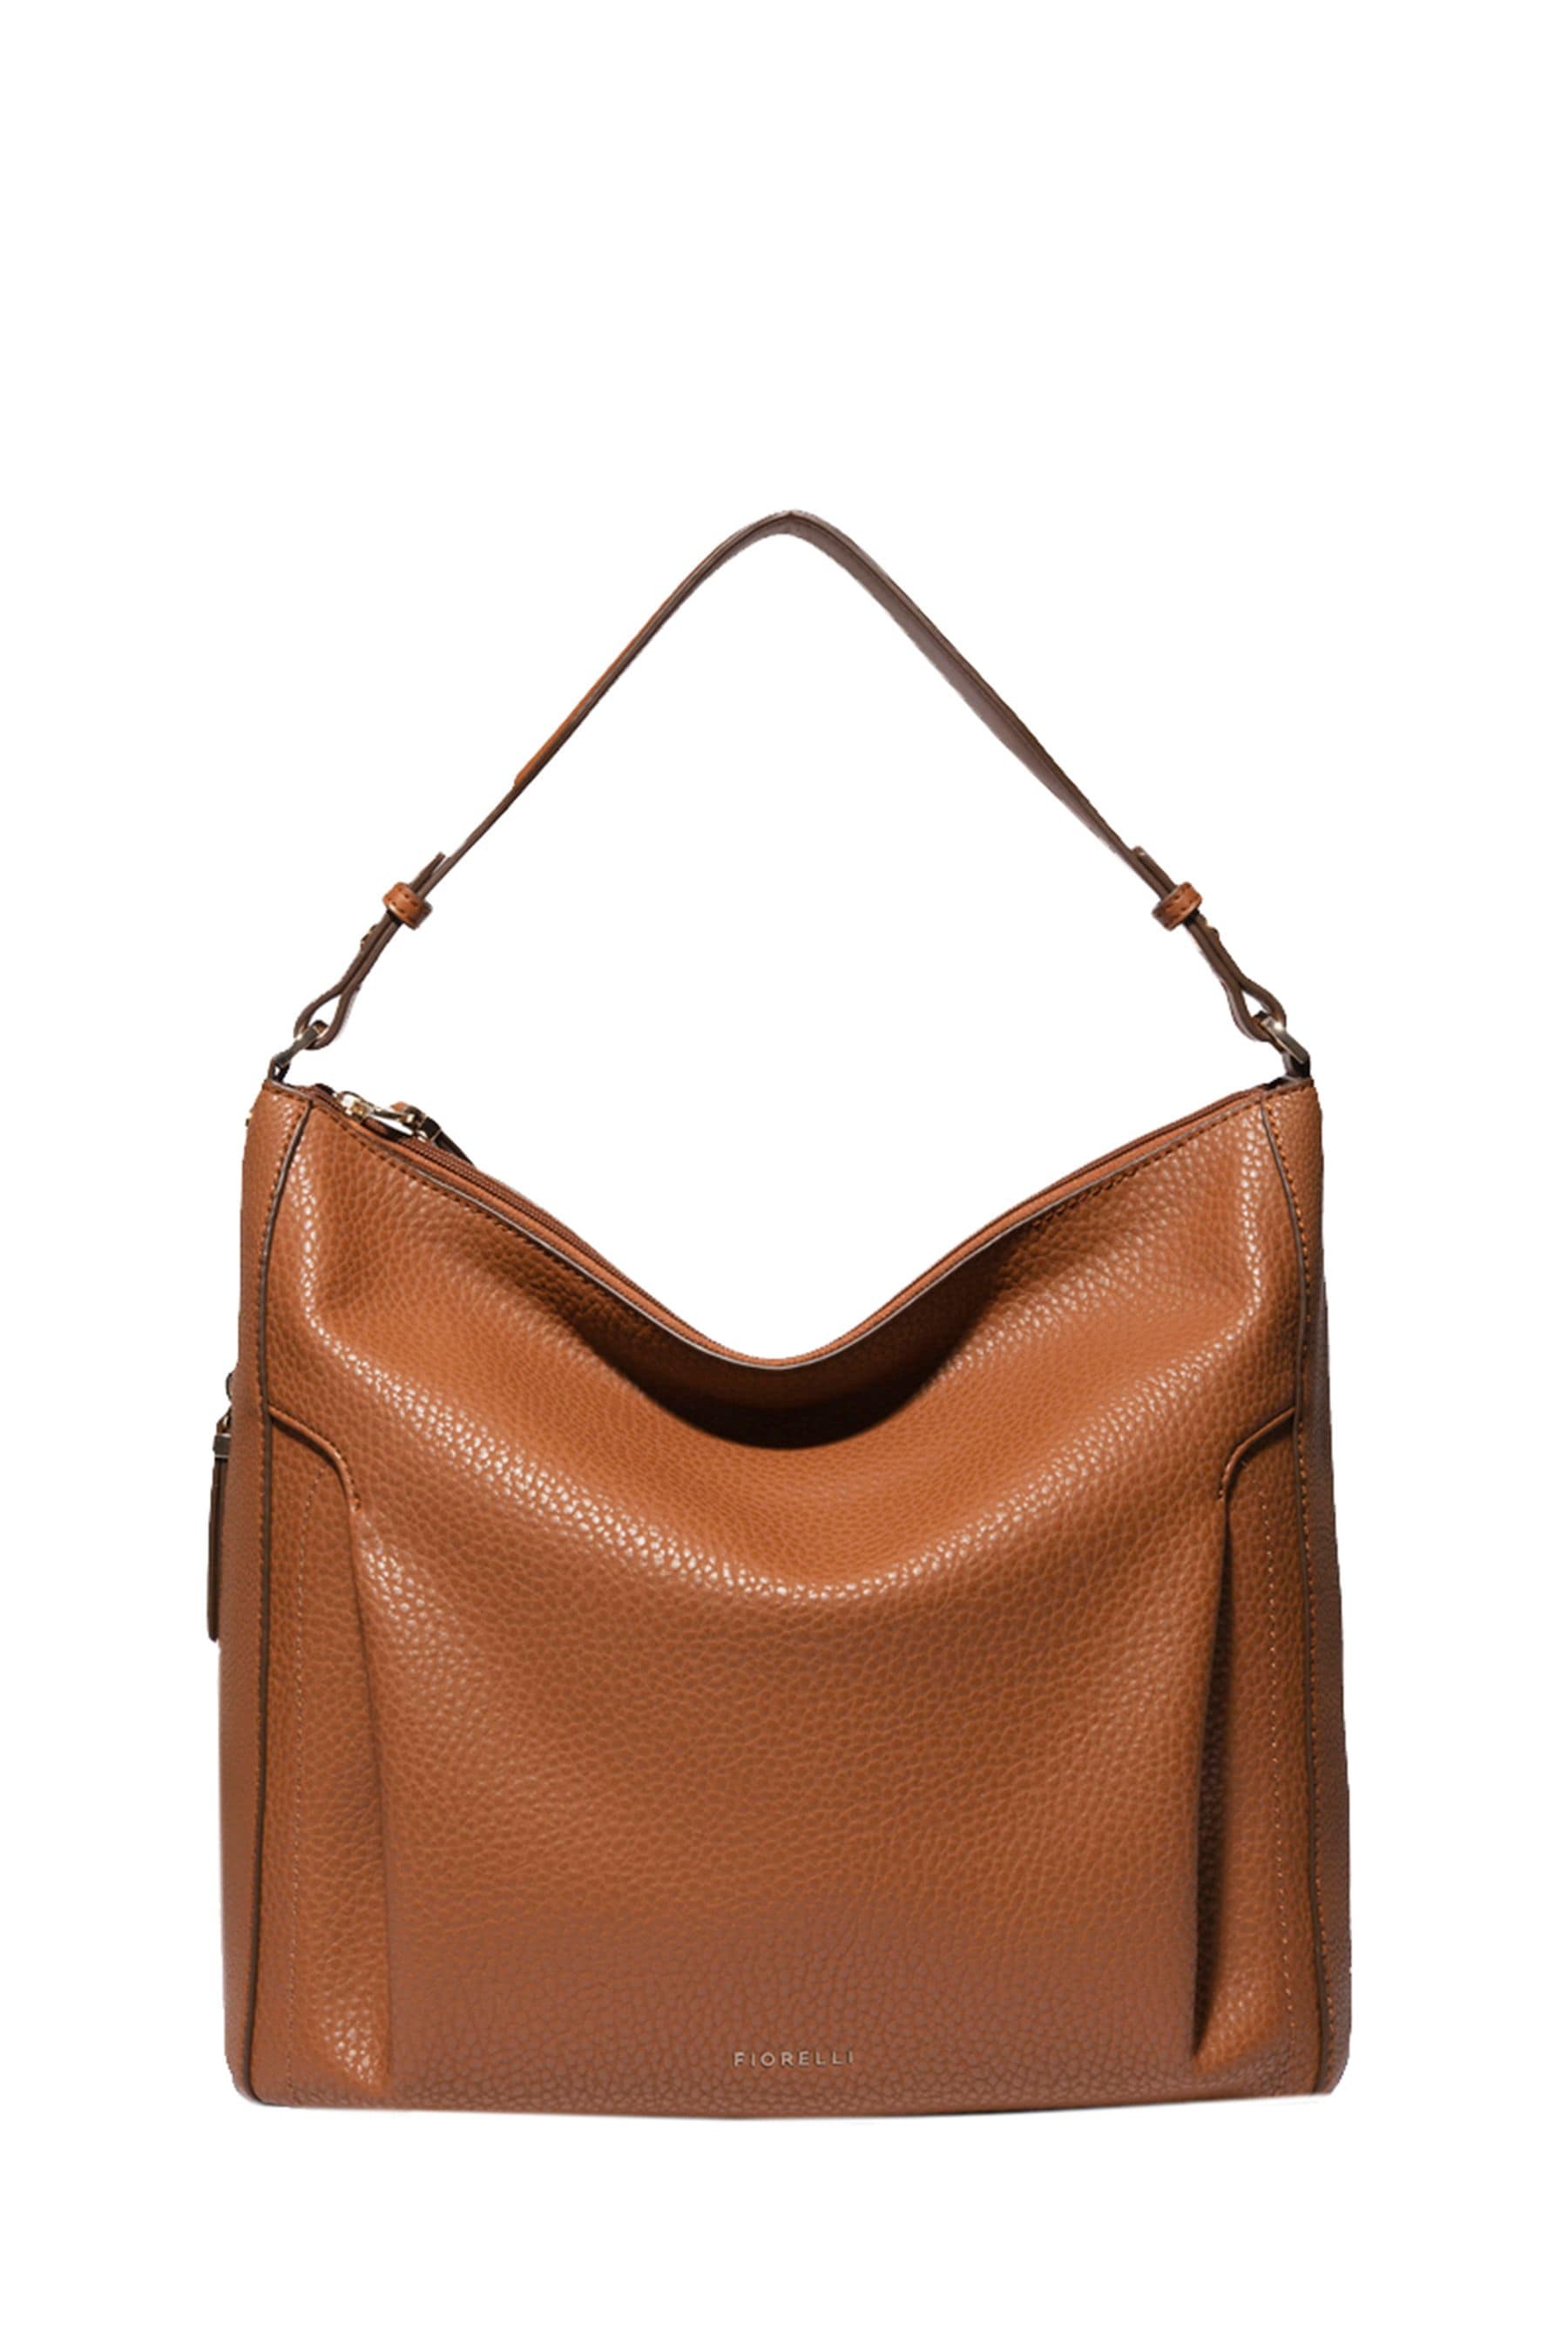 BEAUTIFUL FIORELLI TOTE Hand/Shoulder Bag Chestnut Brown Golden Zip With 3  Purse £35.00 - PicClick UK